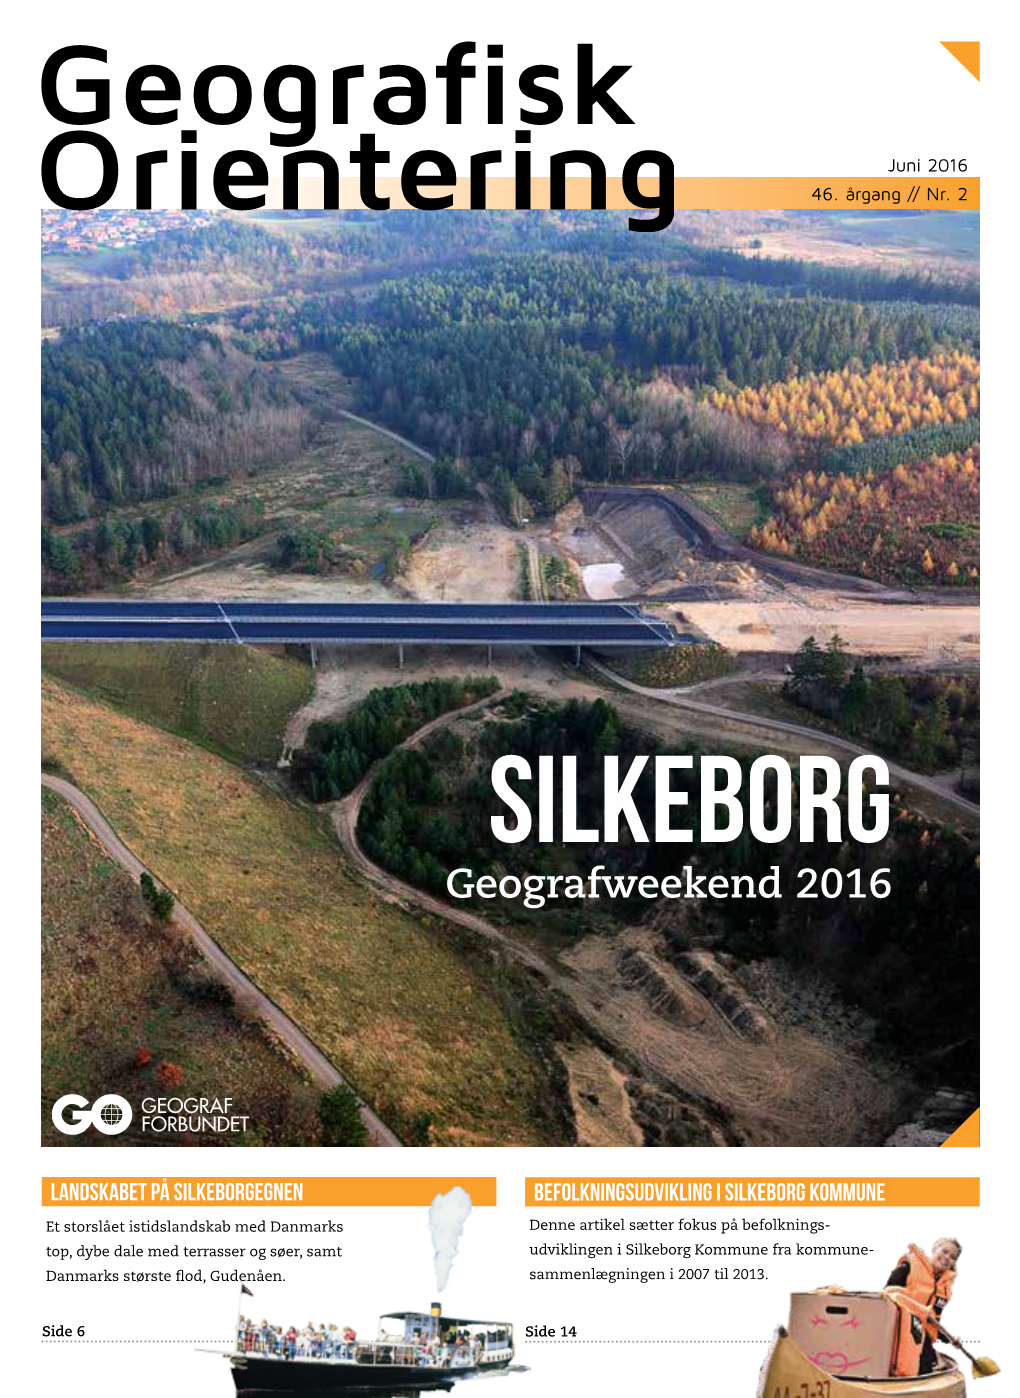 Silkeborg Geografweekend 2016